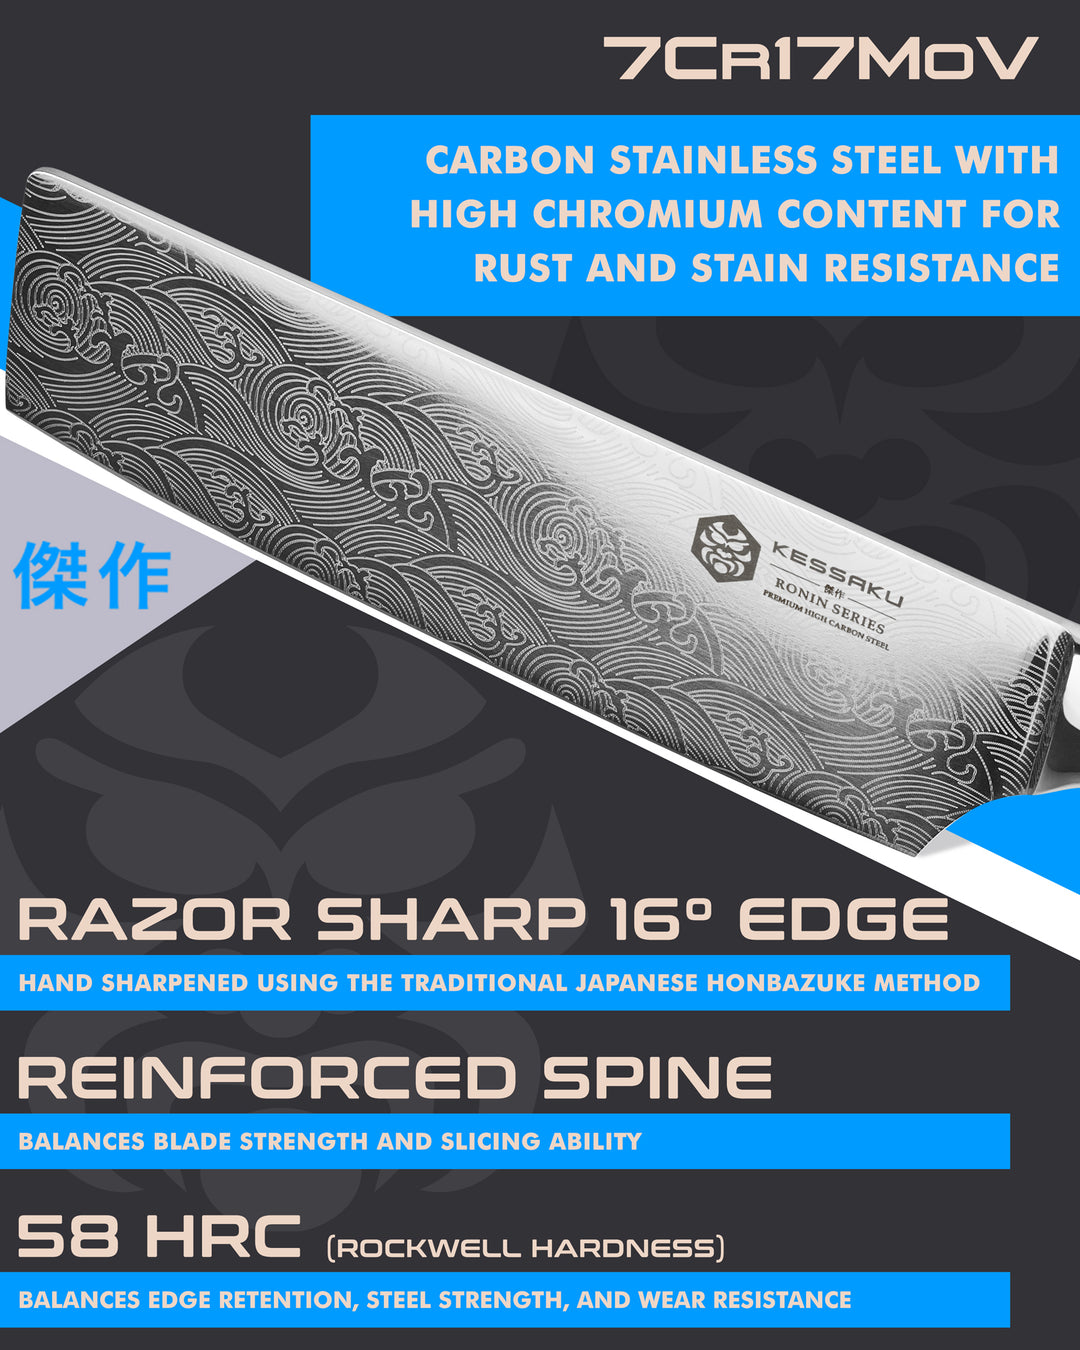 Kessaku Ronin Nakiri Knife blade features: 7Cr17MoV steel, 58 HRC, 16 degree edge, reinforced spine